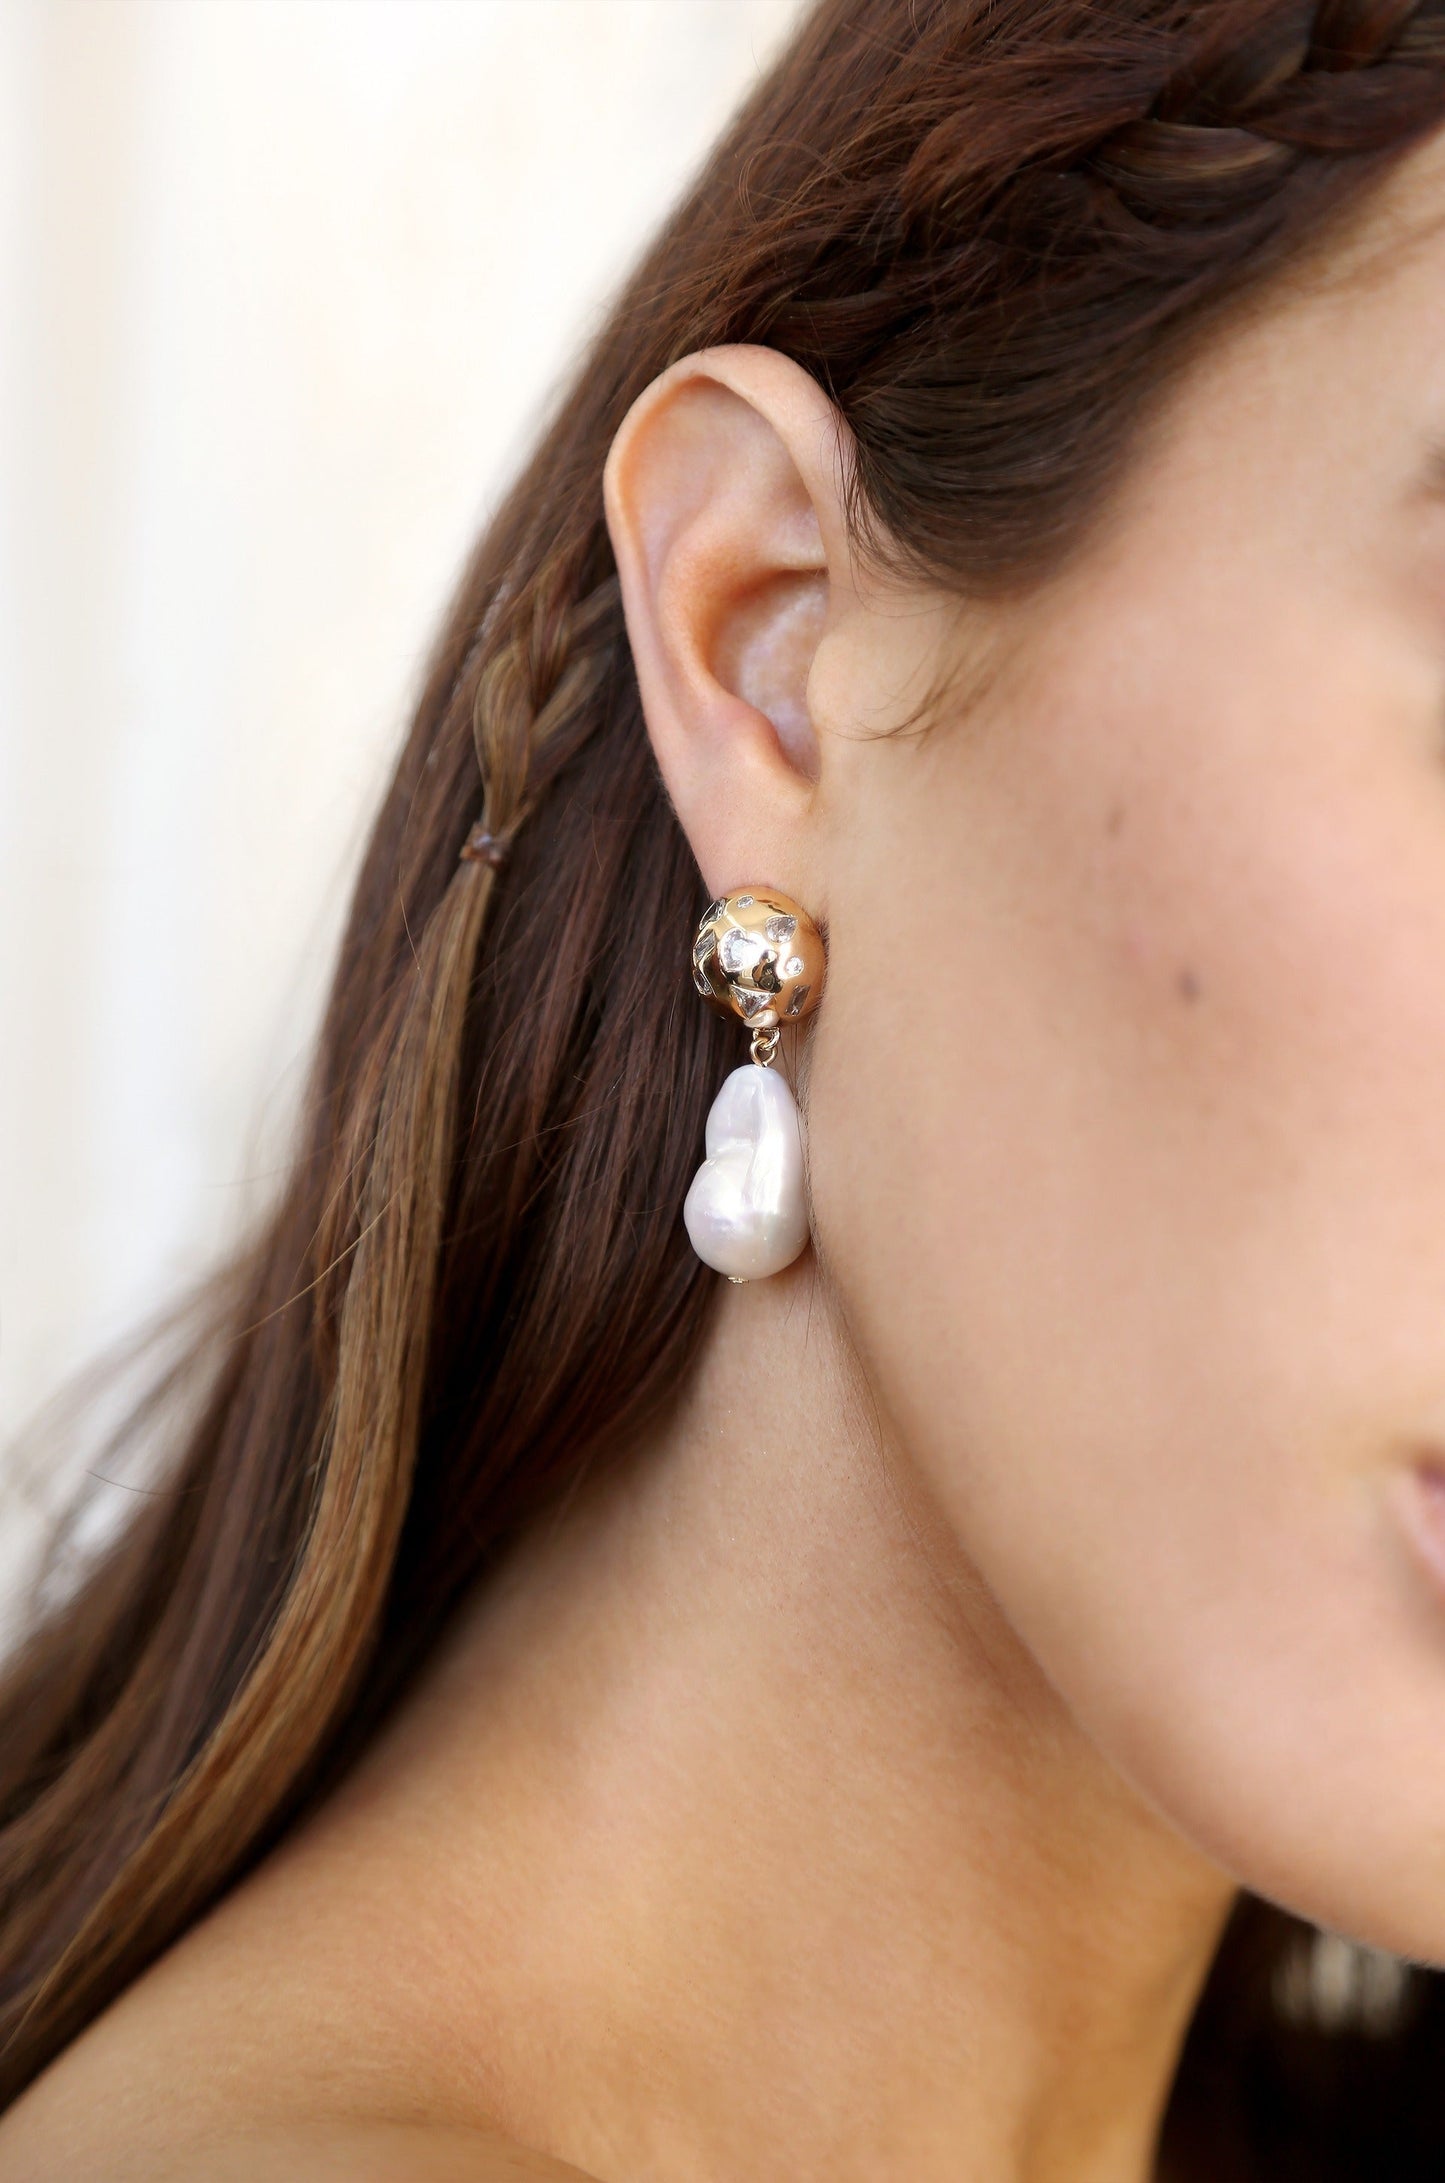 Bezel Ball Drop Pearl Earrings - Premium Earrings from Ettika - Just $100! Shop now at Tooksie